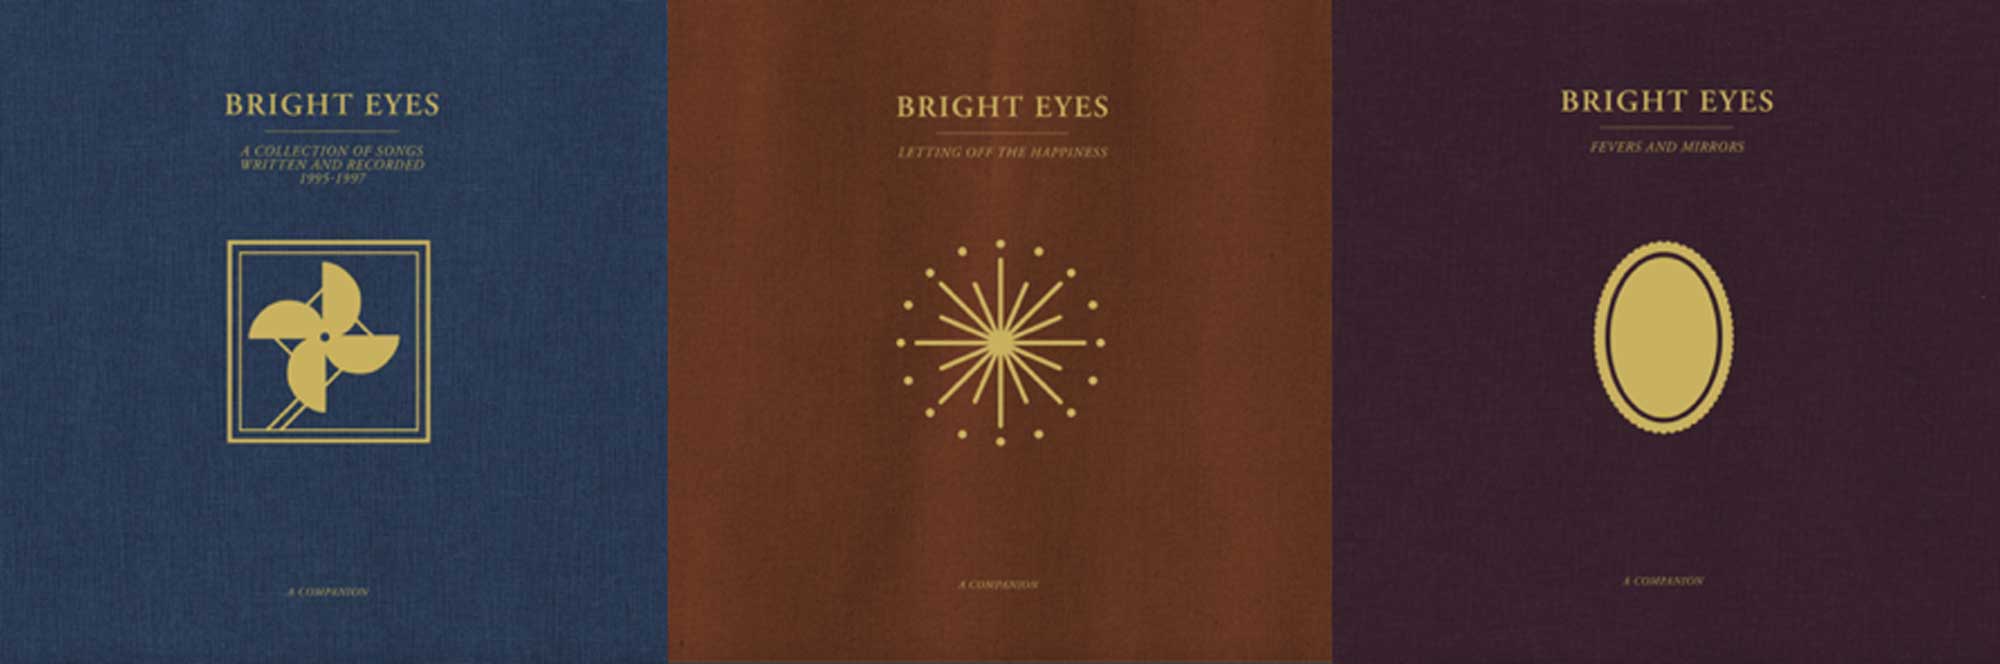 Bright Eyes band